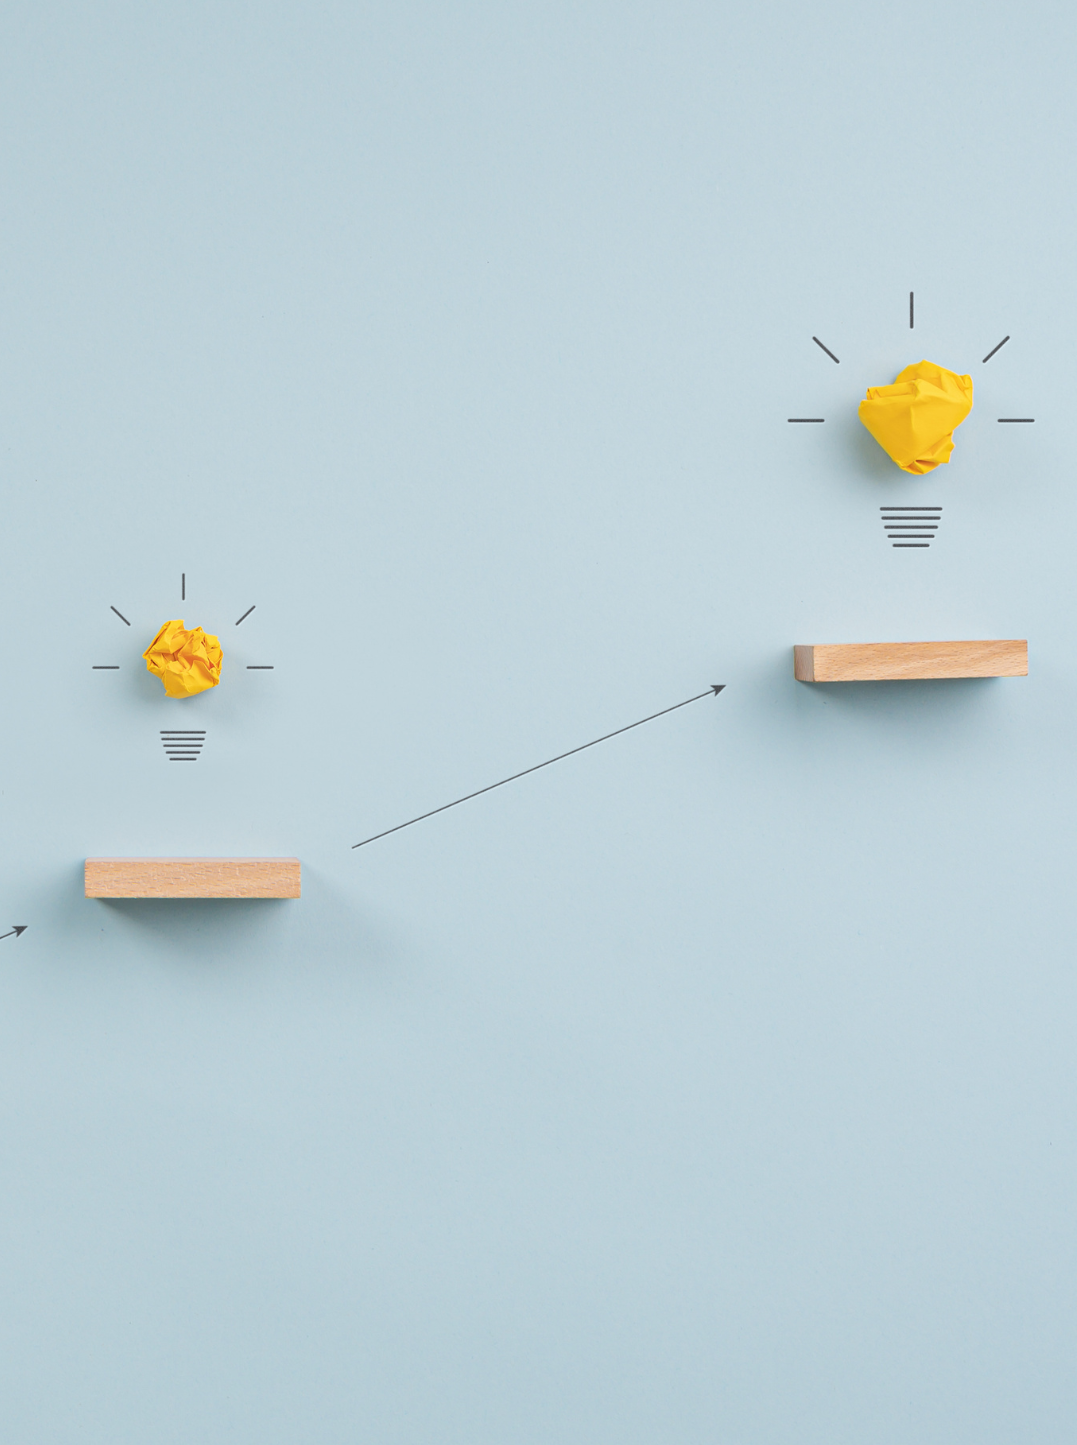 Image showing two yellow lightbulb images. Illustrating moving upwards towards brighter ideas.